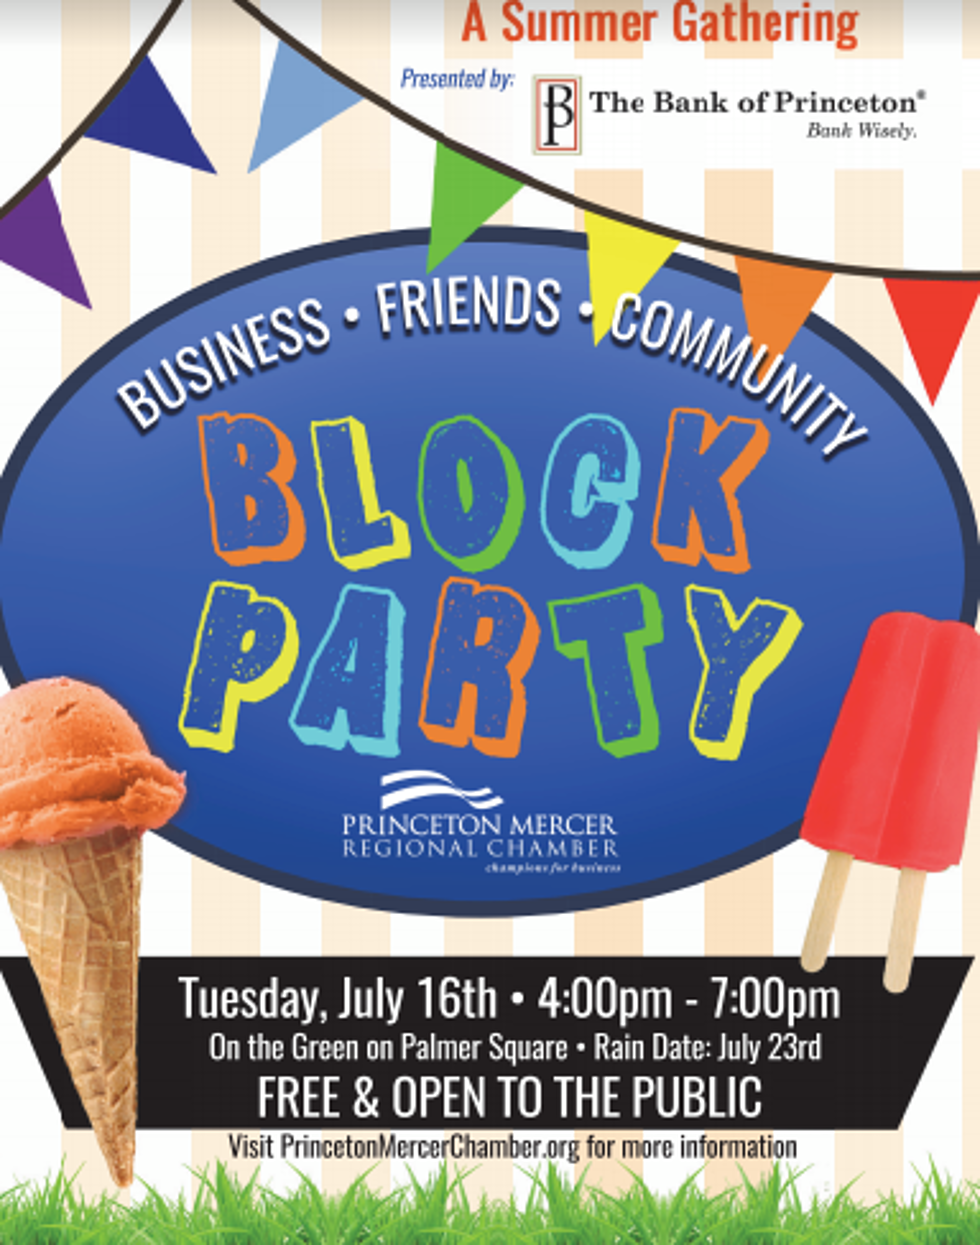 Princeton Mercer Chamber Mid Summer Block Party Tonight!